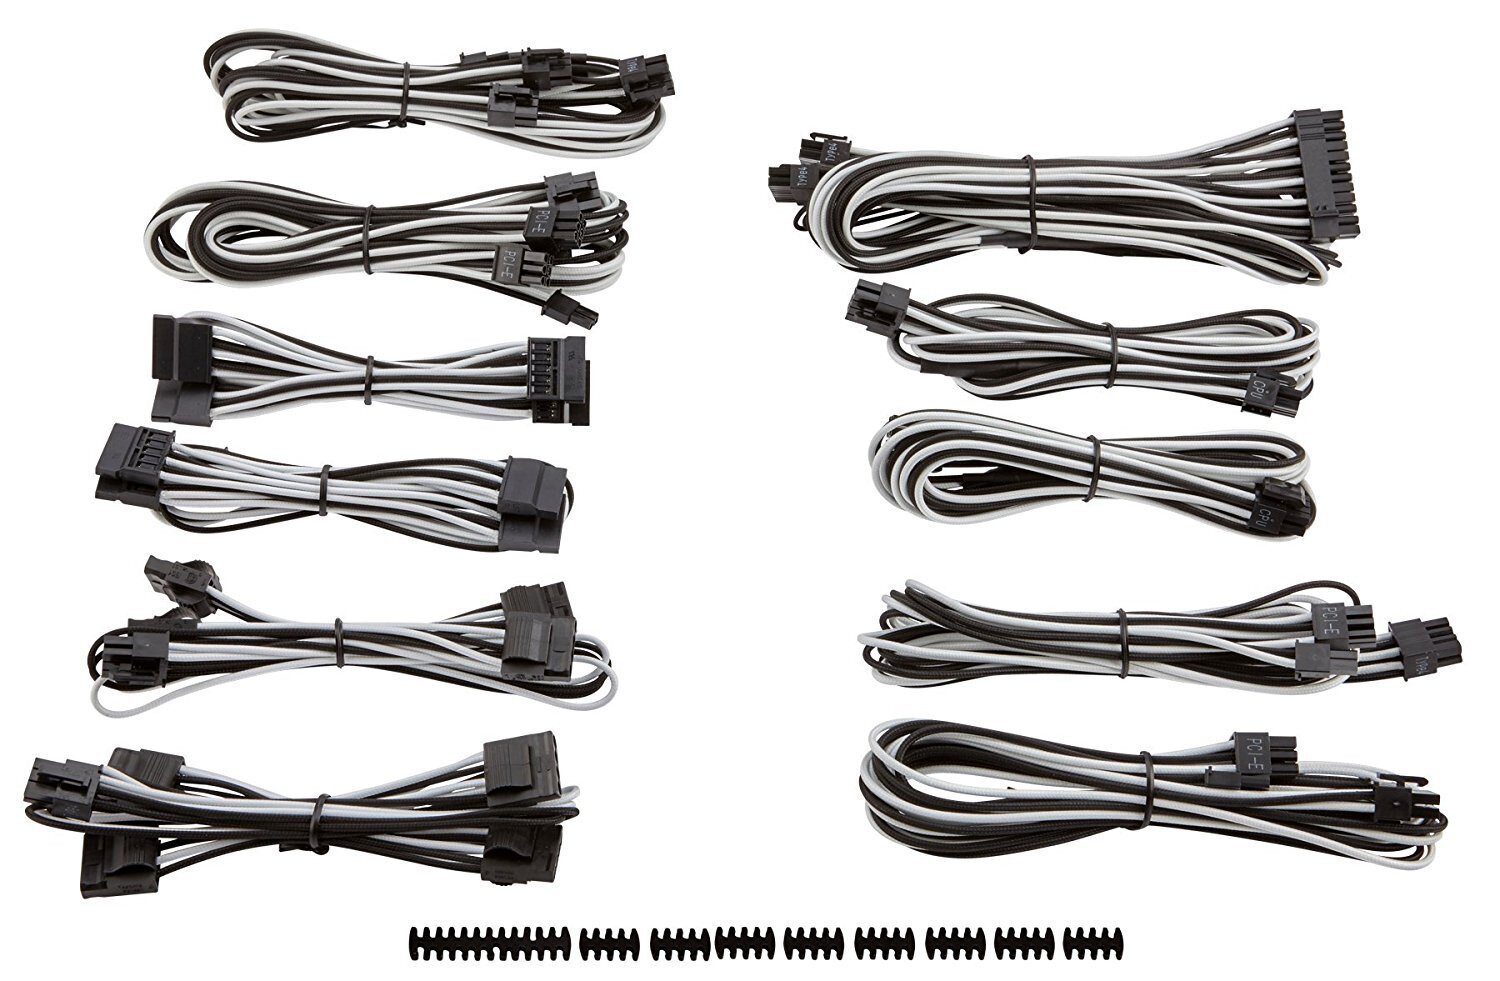 Fantastiske Komprimere Ideel Buy Corsair Premium Individually Sleeved PSU Cable Kit Pro Package, Type 4  (Generation 3) - White/Black online Worldwide - Tejar.com